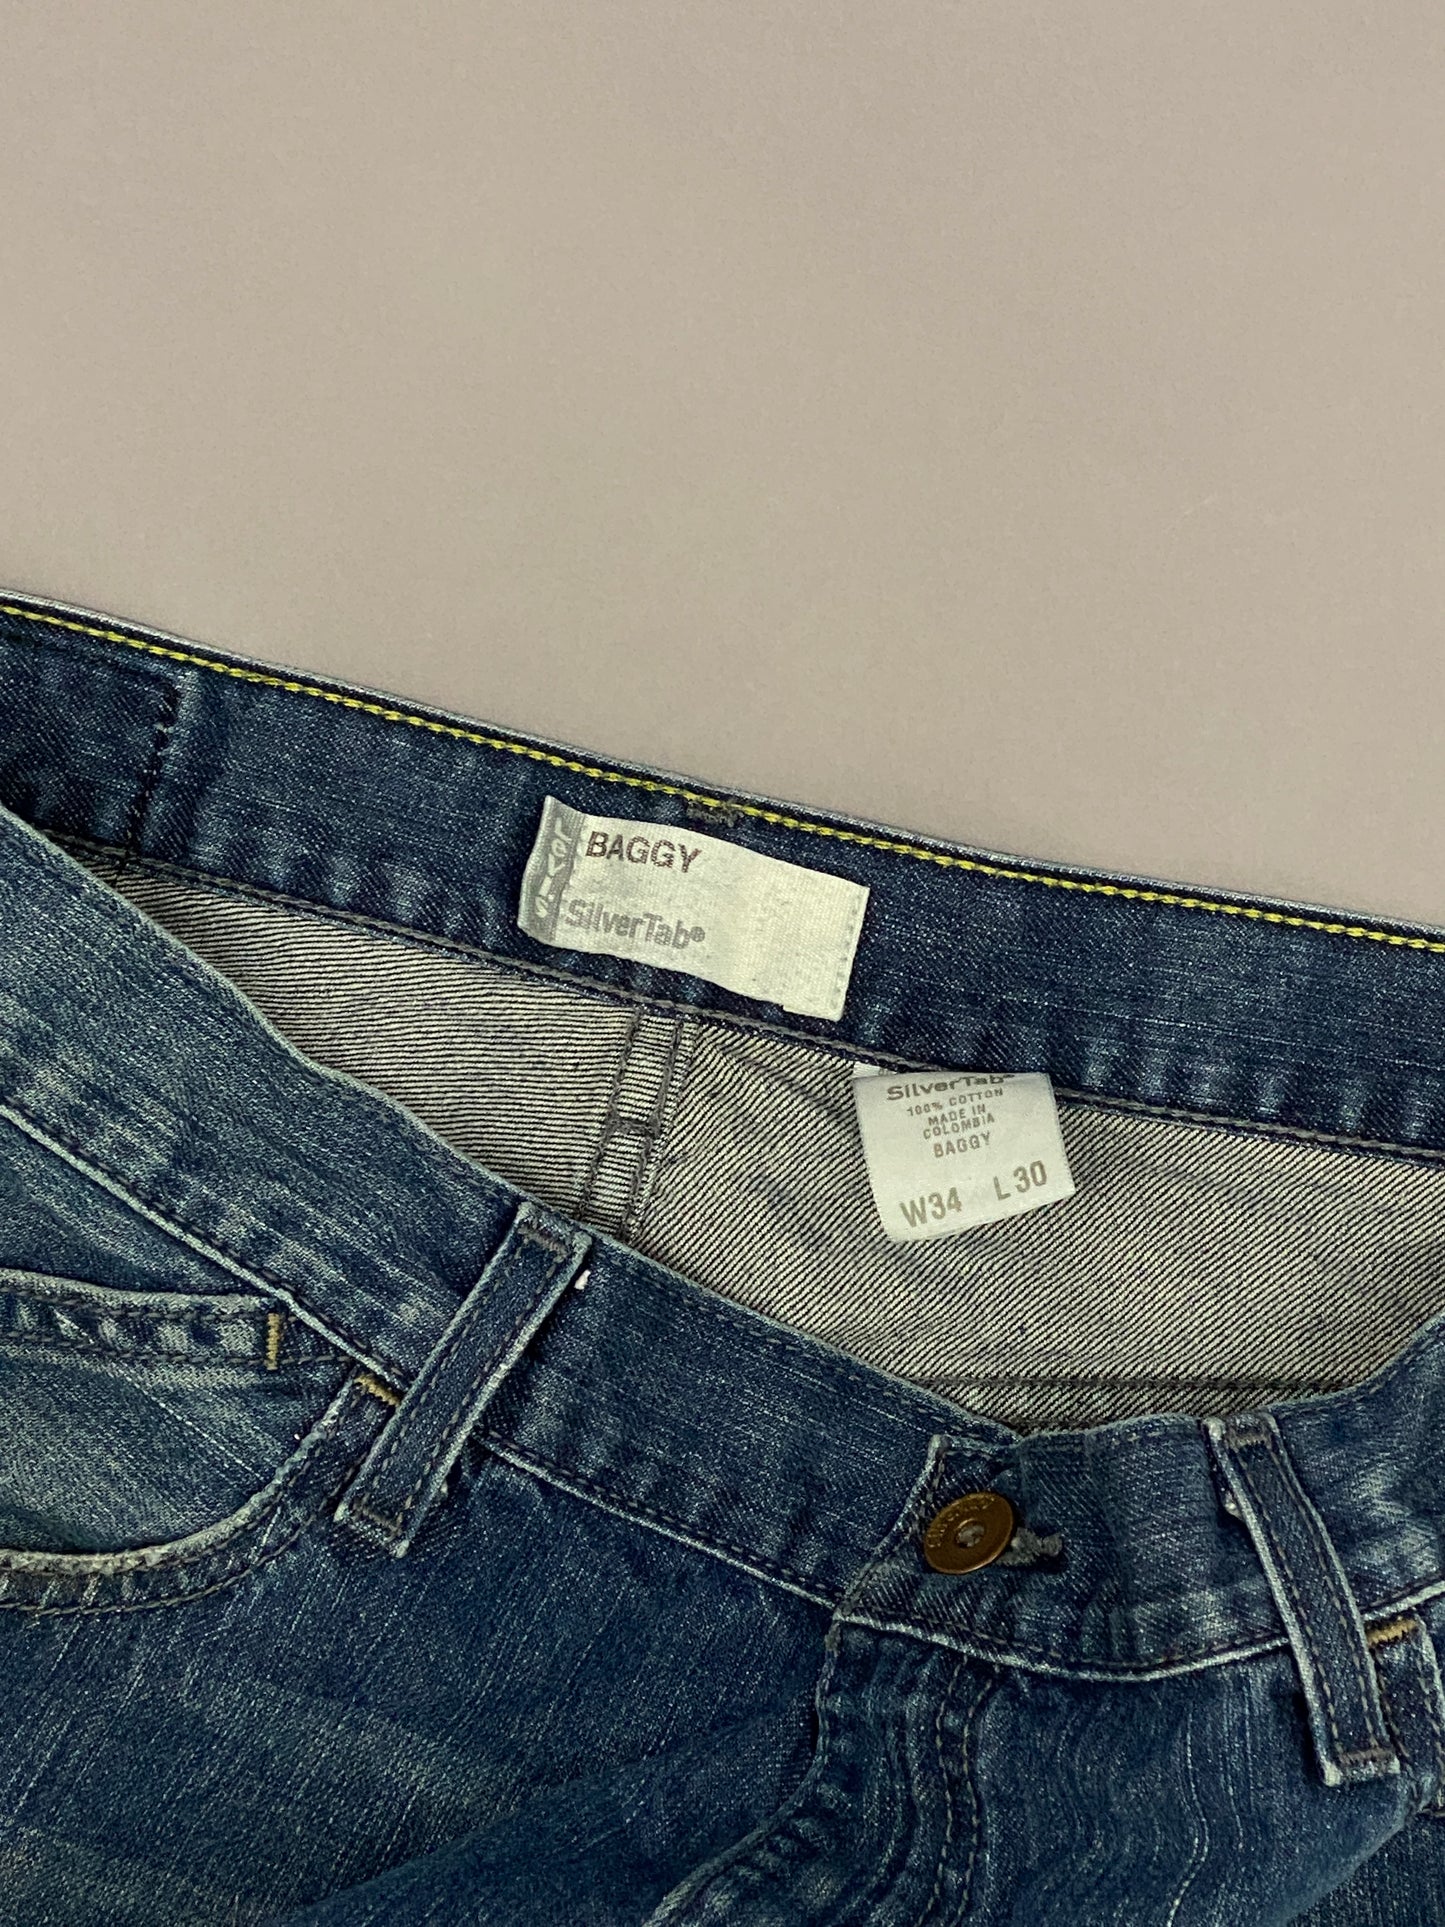 Jeans Levis Silver Tab Baggy Vintage - 34 x 30